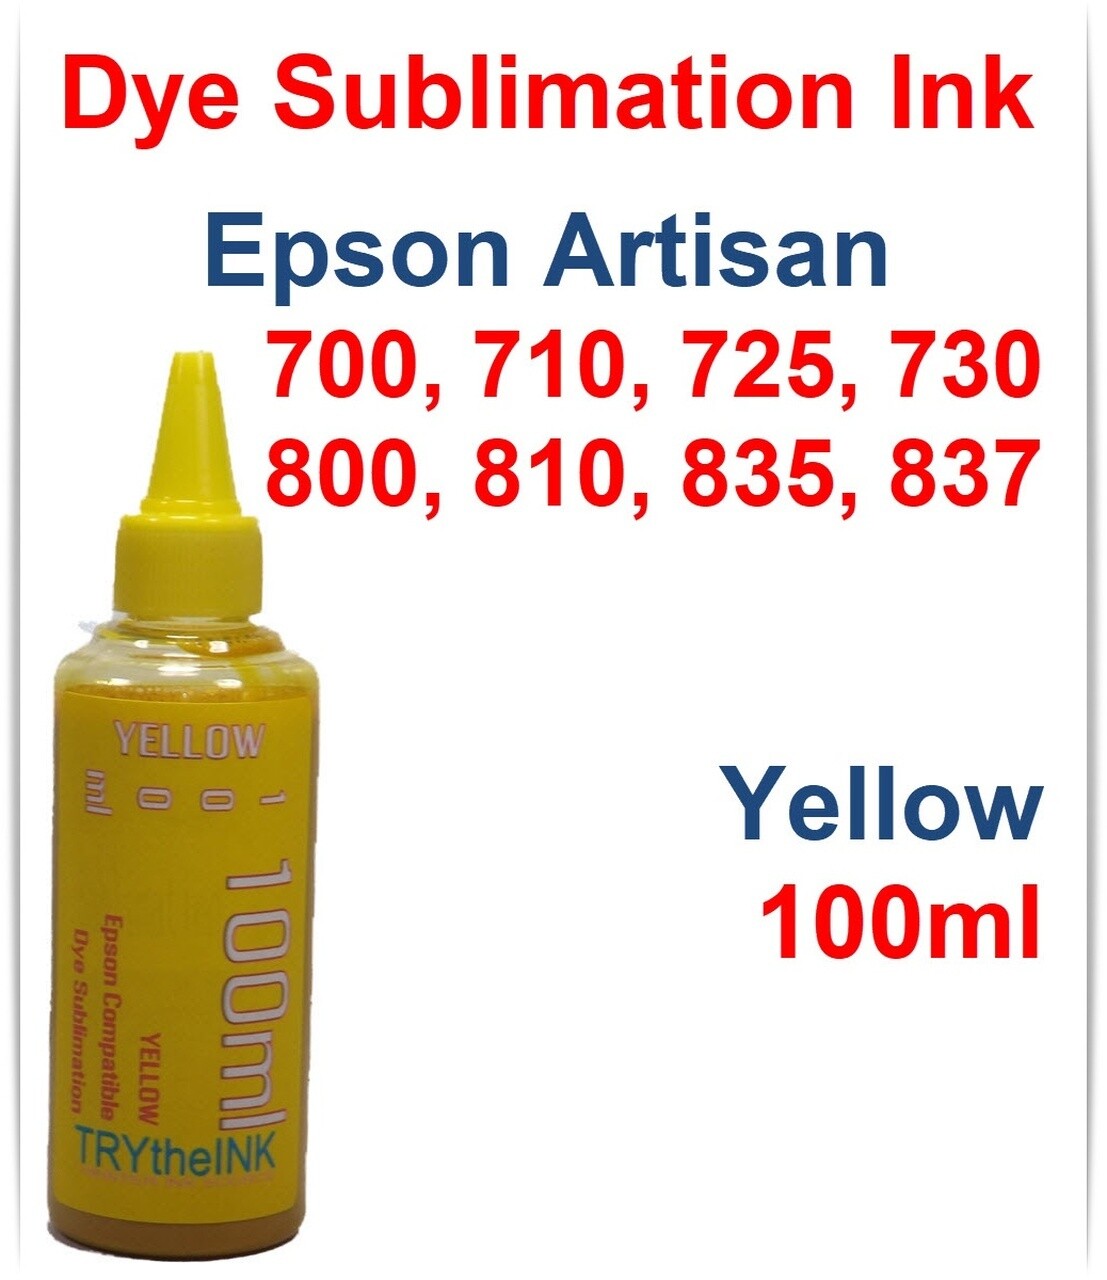 Yellow Dye Sublimation Ink 100ml for Epson Artisan 700 710 725 730 800 810 835 837